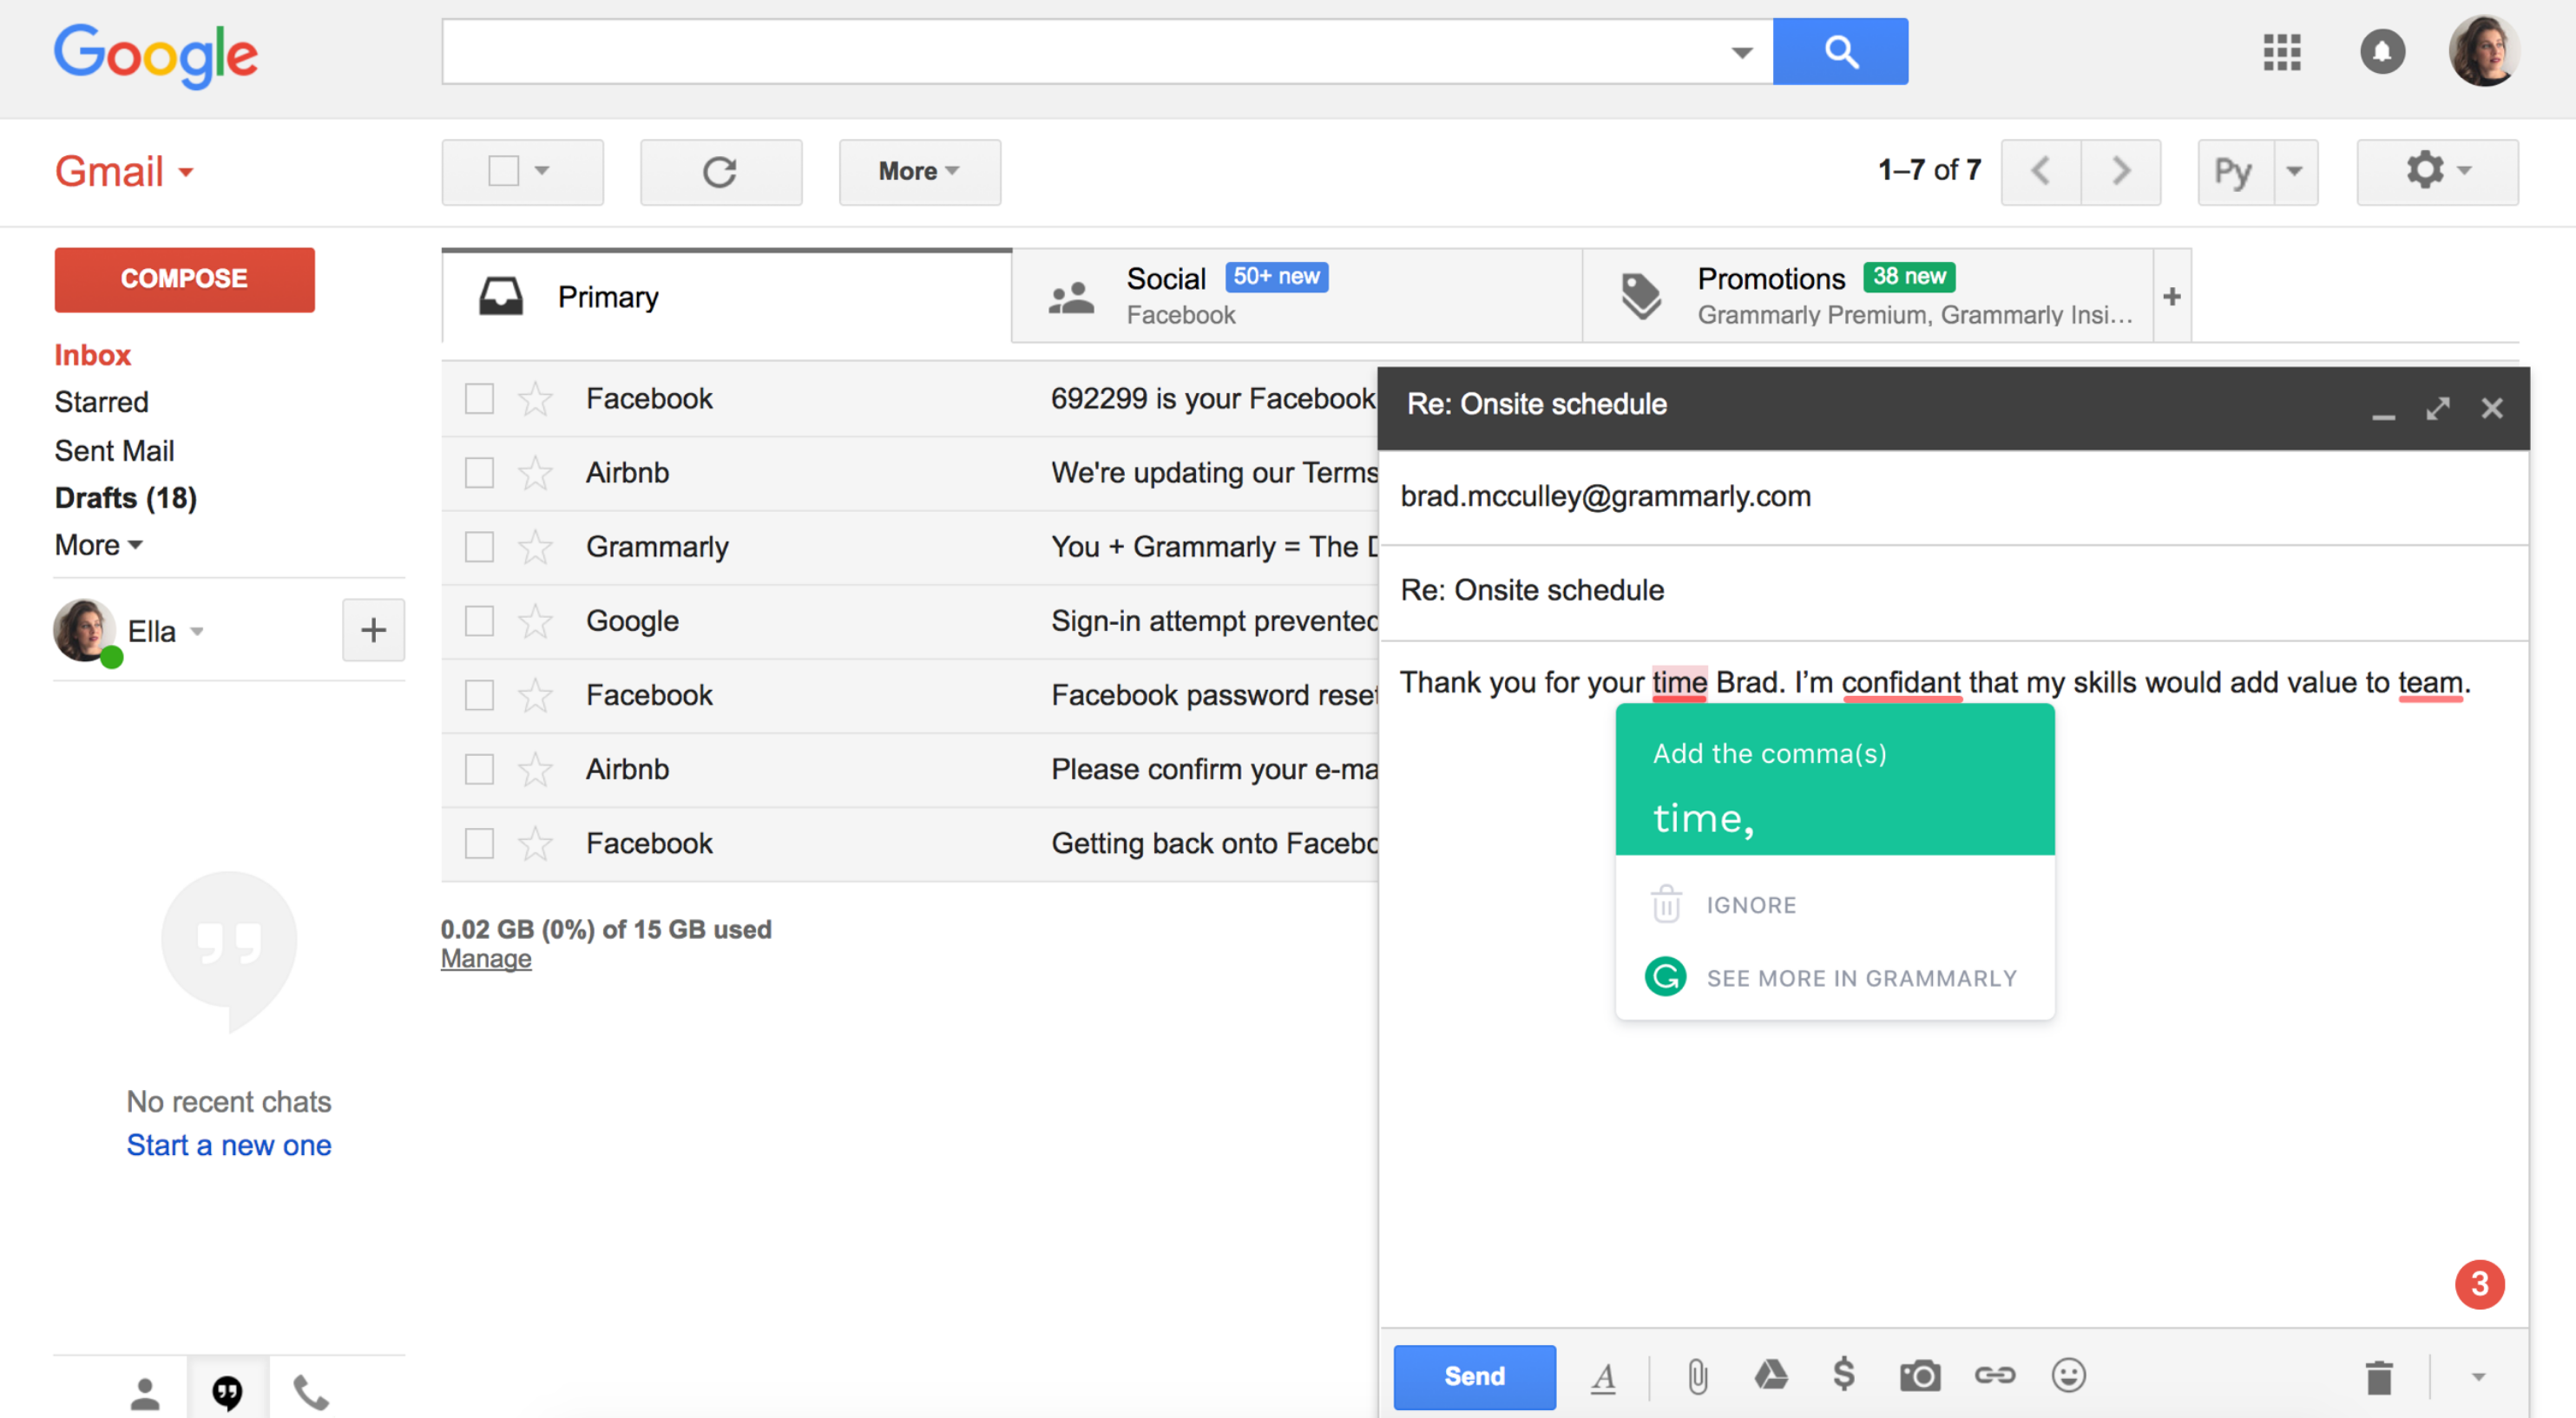 Ways to Improve Work Performance: Grammarly Editor on Gmail